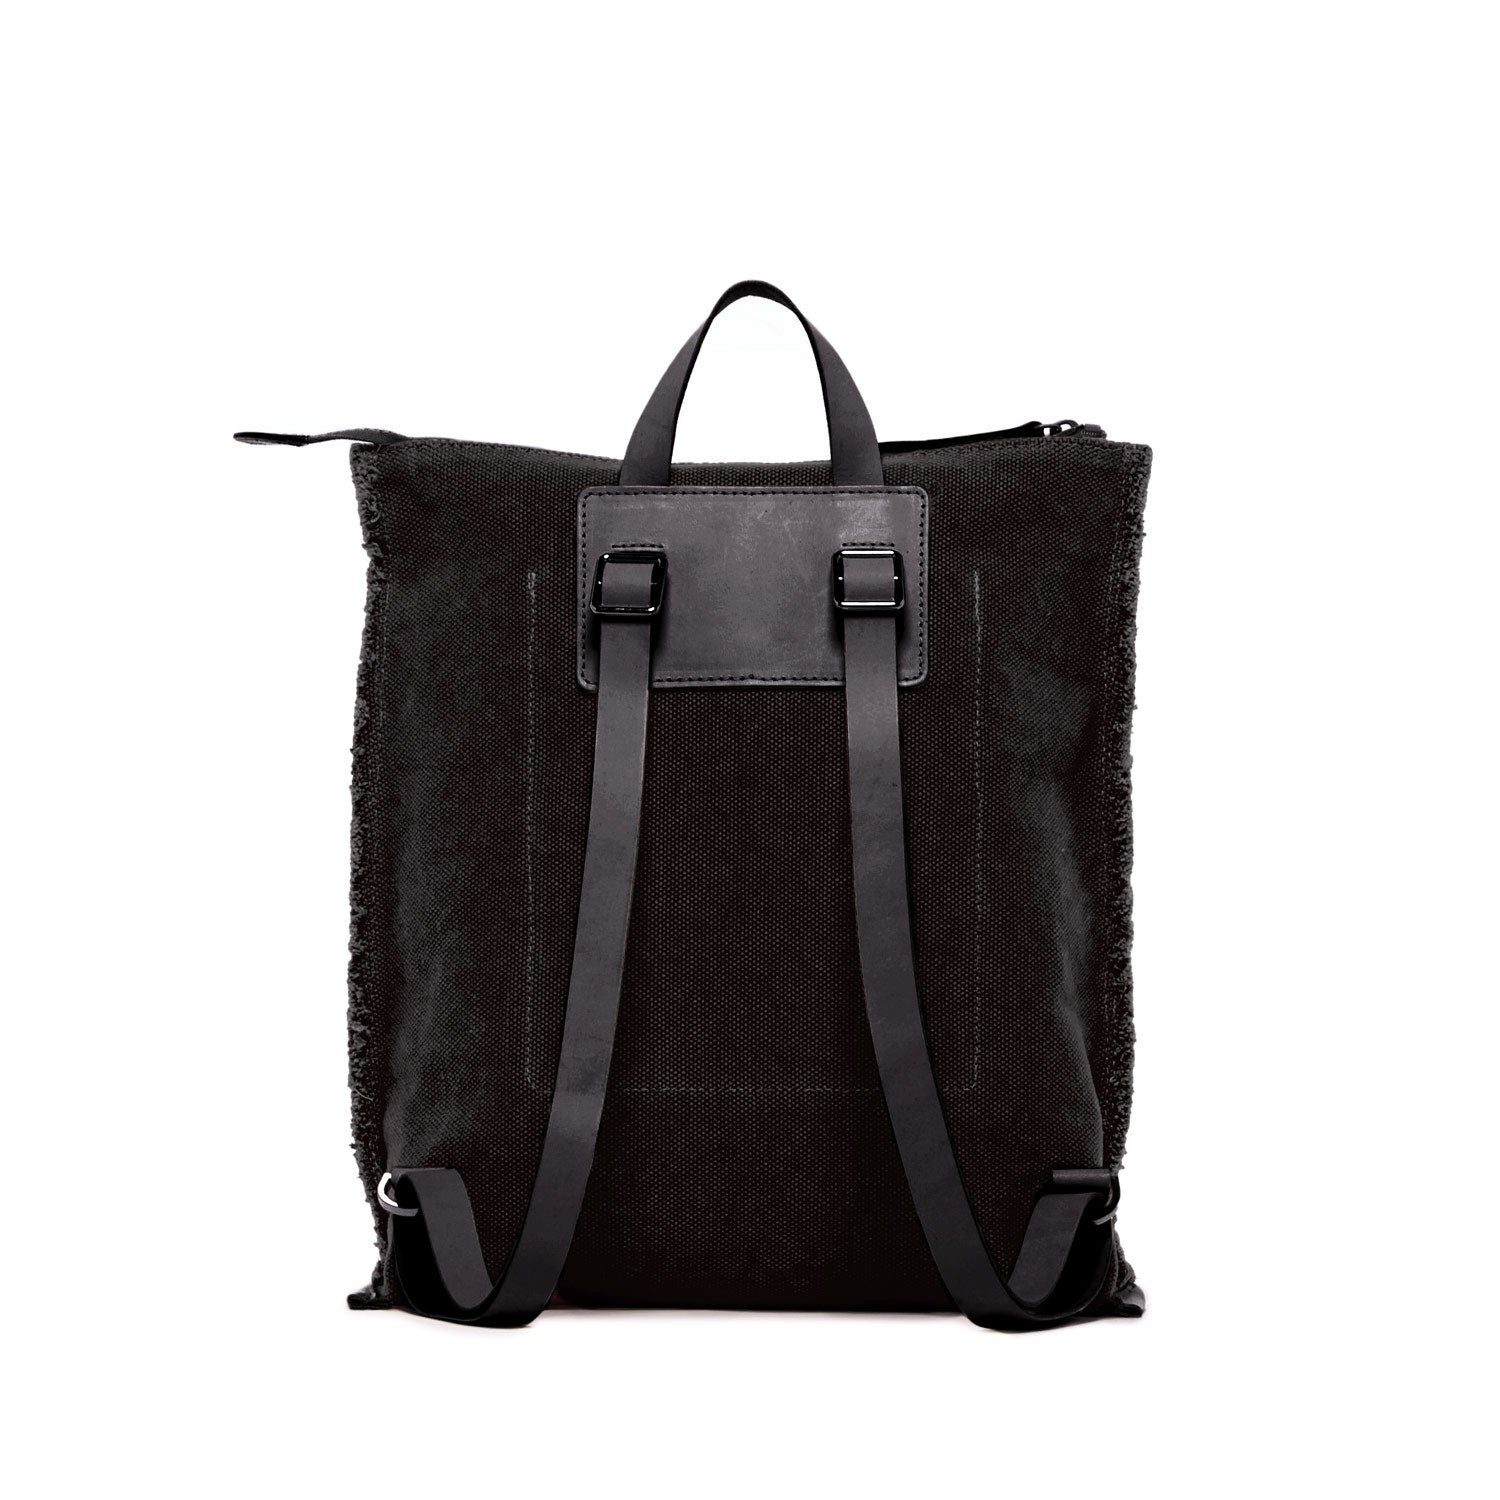 Cote Backpack Black Canvas & Black Leather